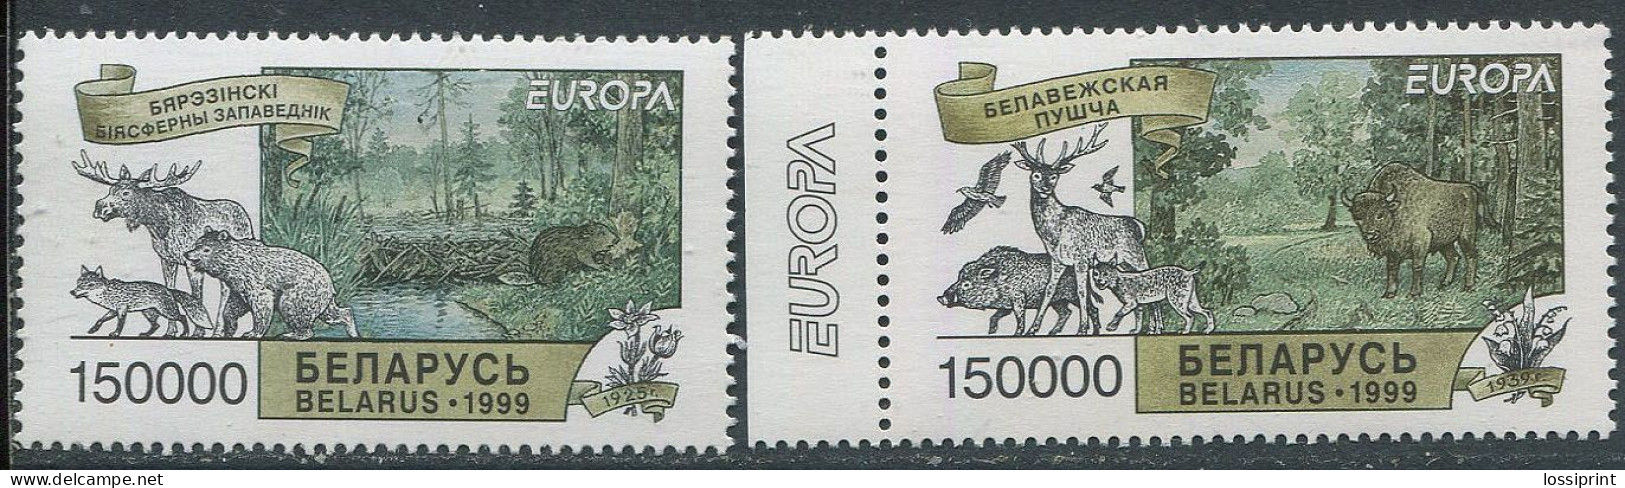 Belarus:Unused Stamps EUROPA Cept 1999, Animals, MNH - Bielorussia